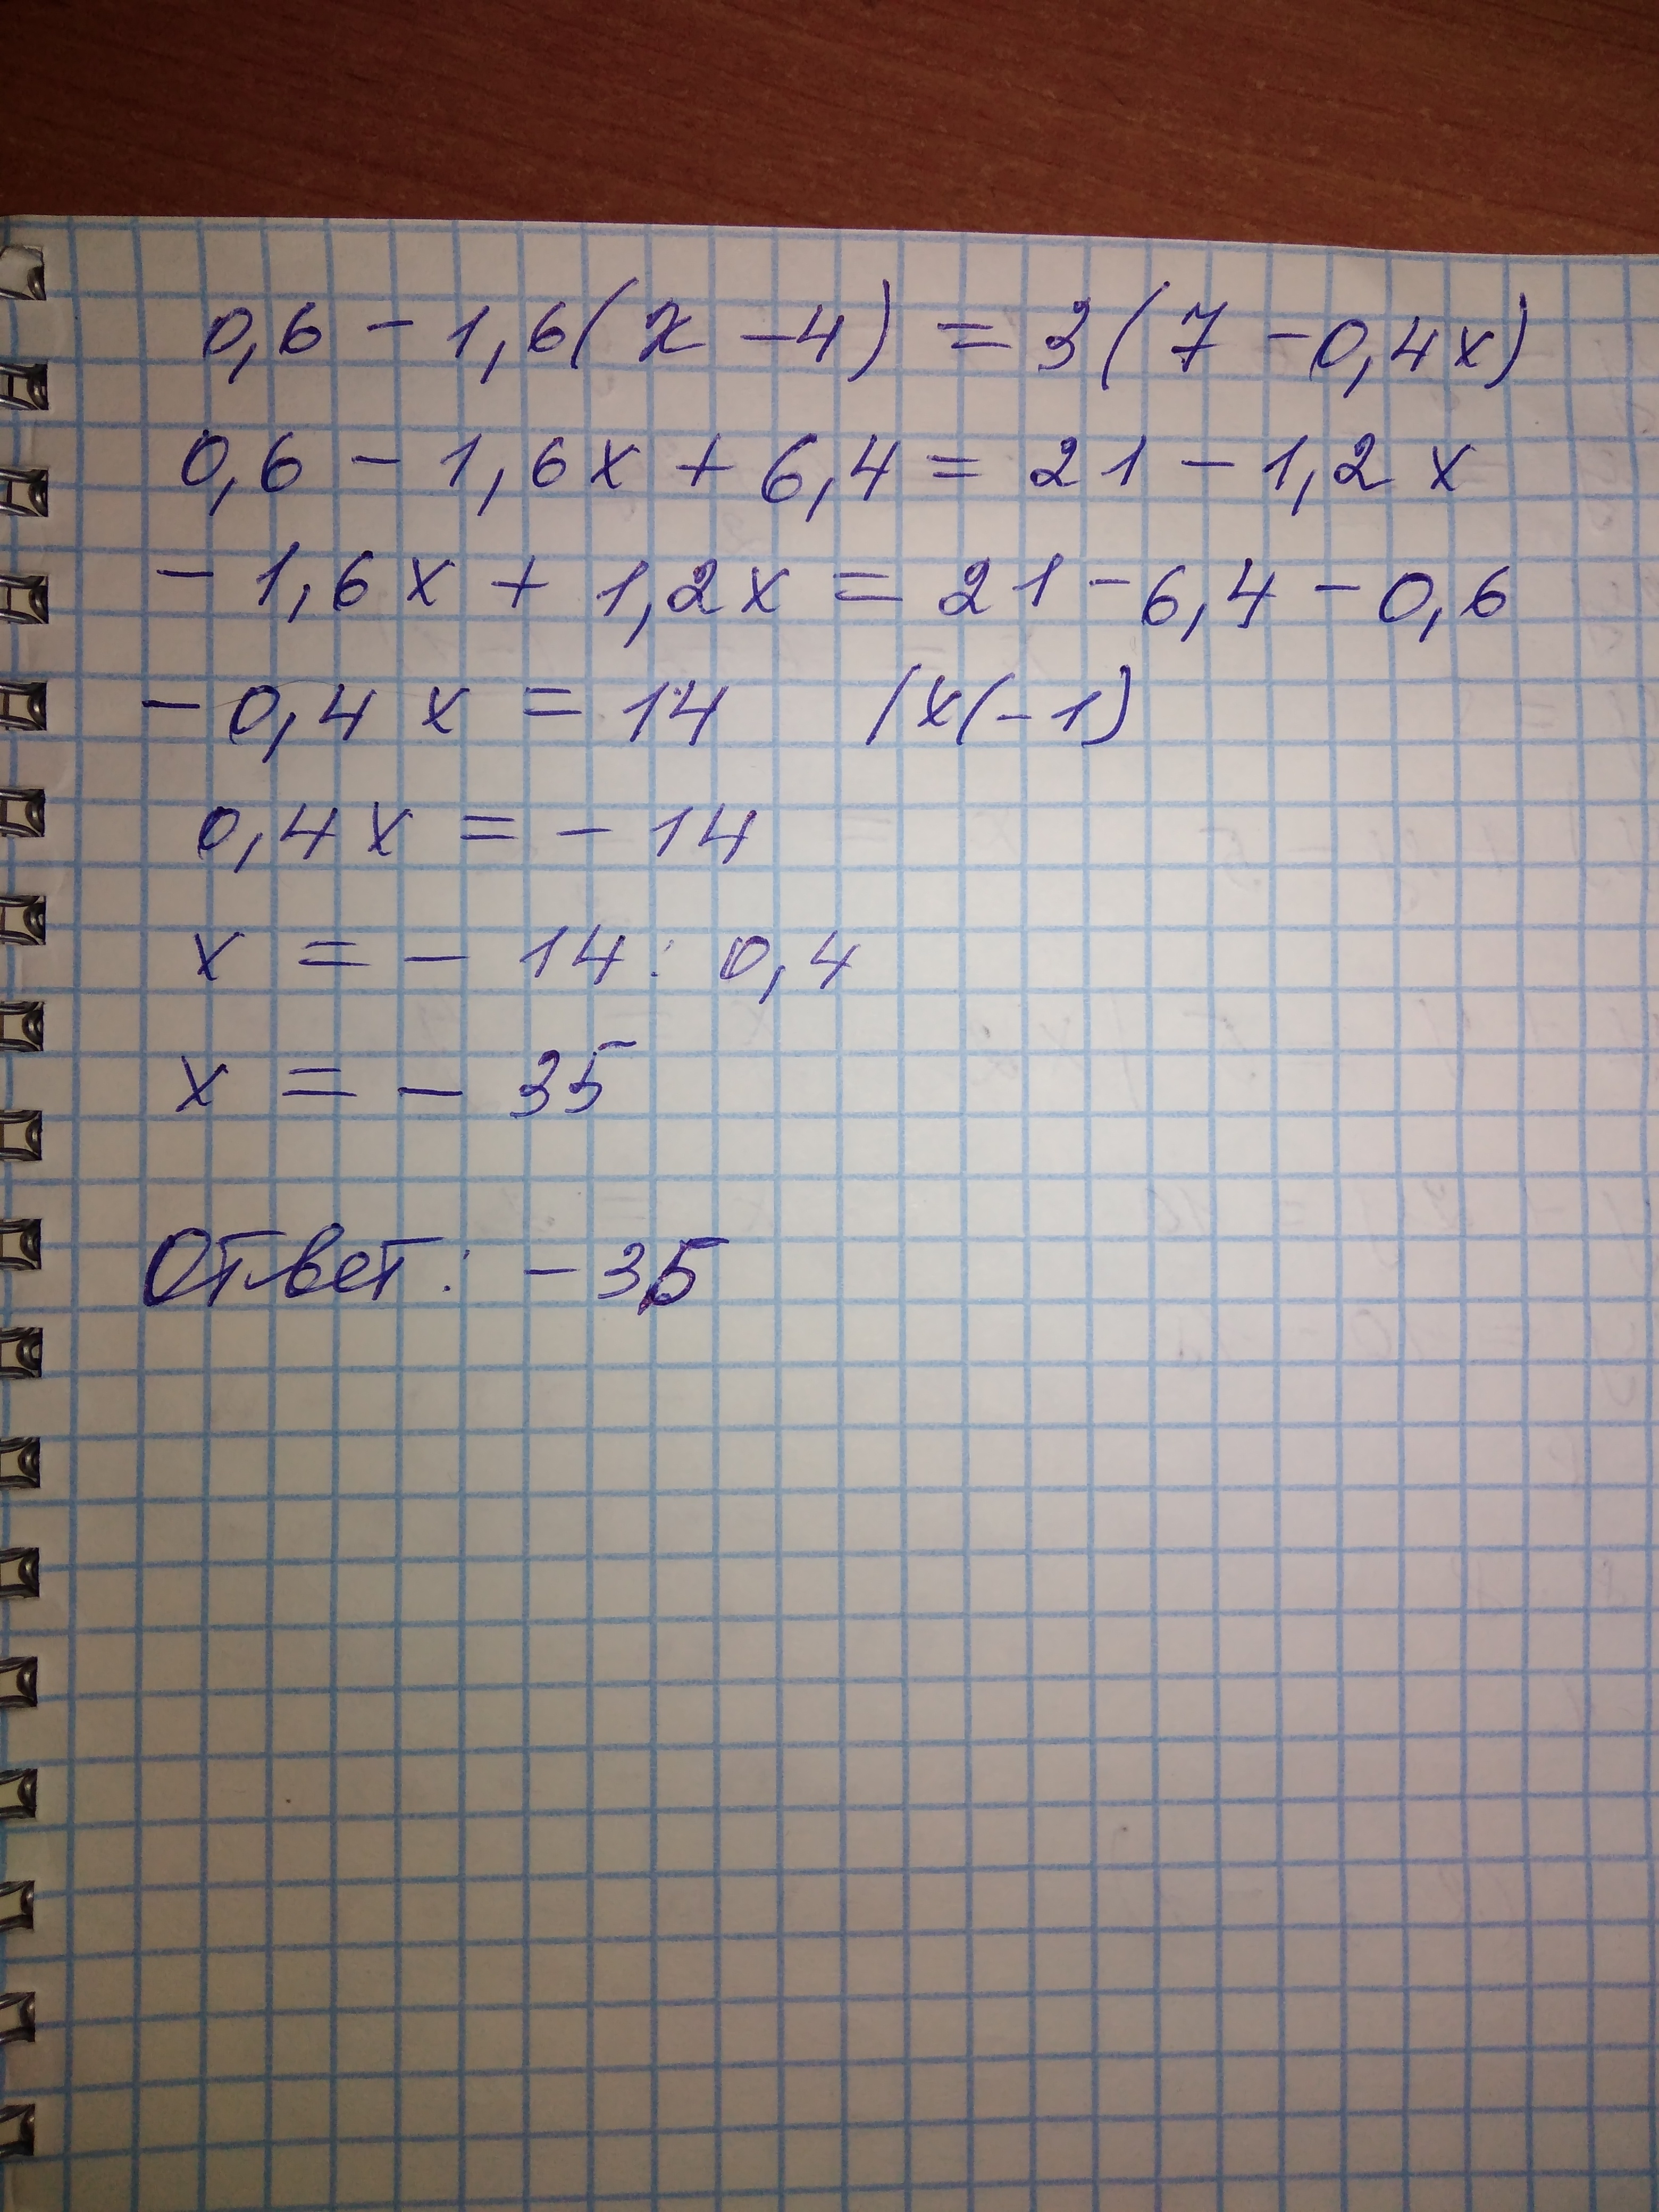 4x2 4x 3 0. 6x4. X+6=X*4. X+6=X×4 решение. 3x(x - 4x + 6).